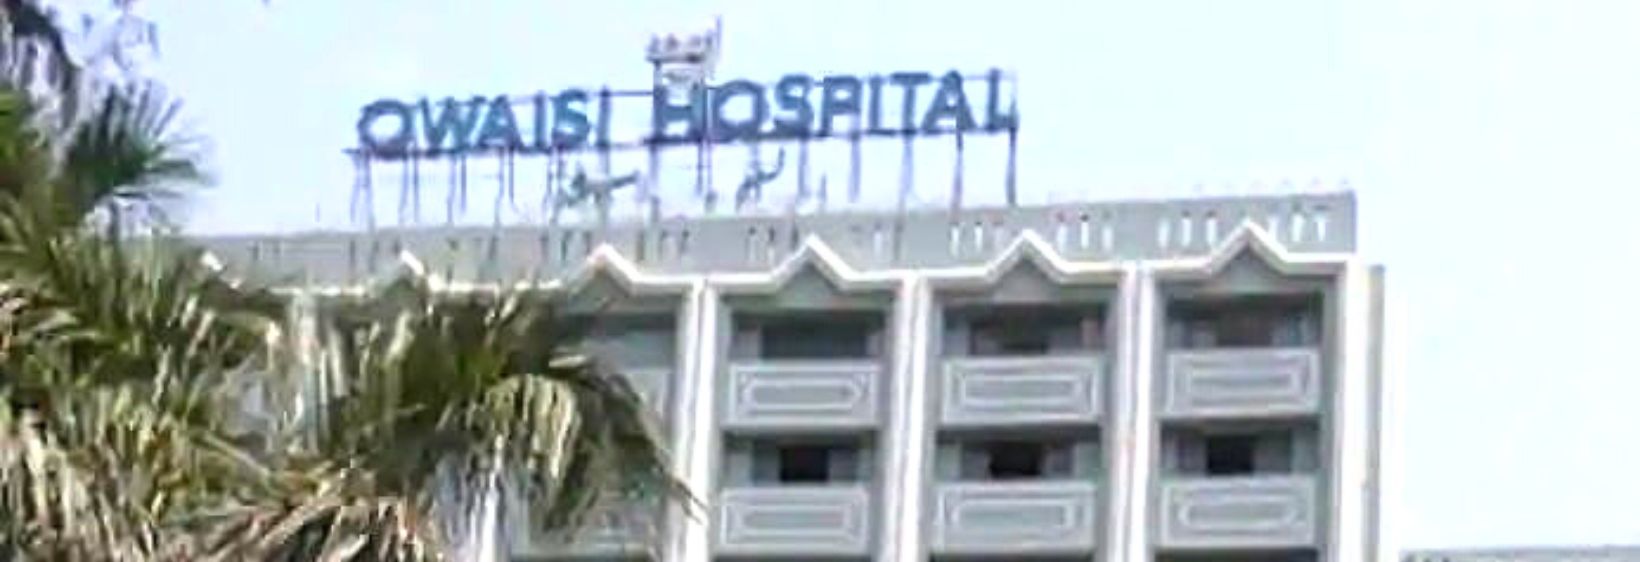 Owaisi College of Nursing - Hyderabad